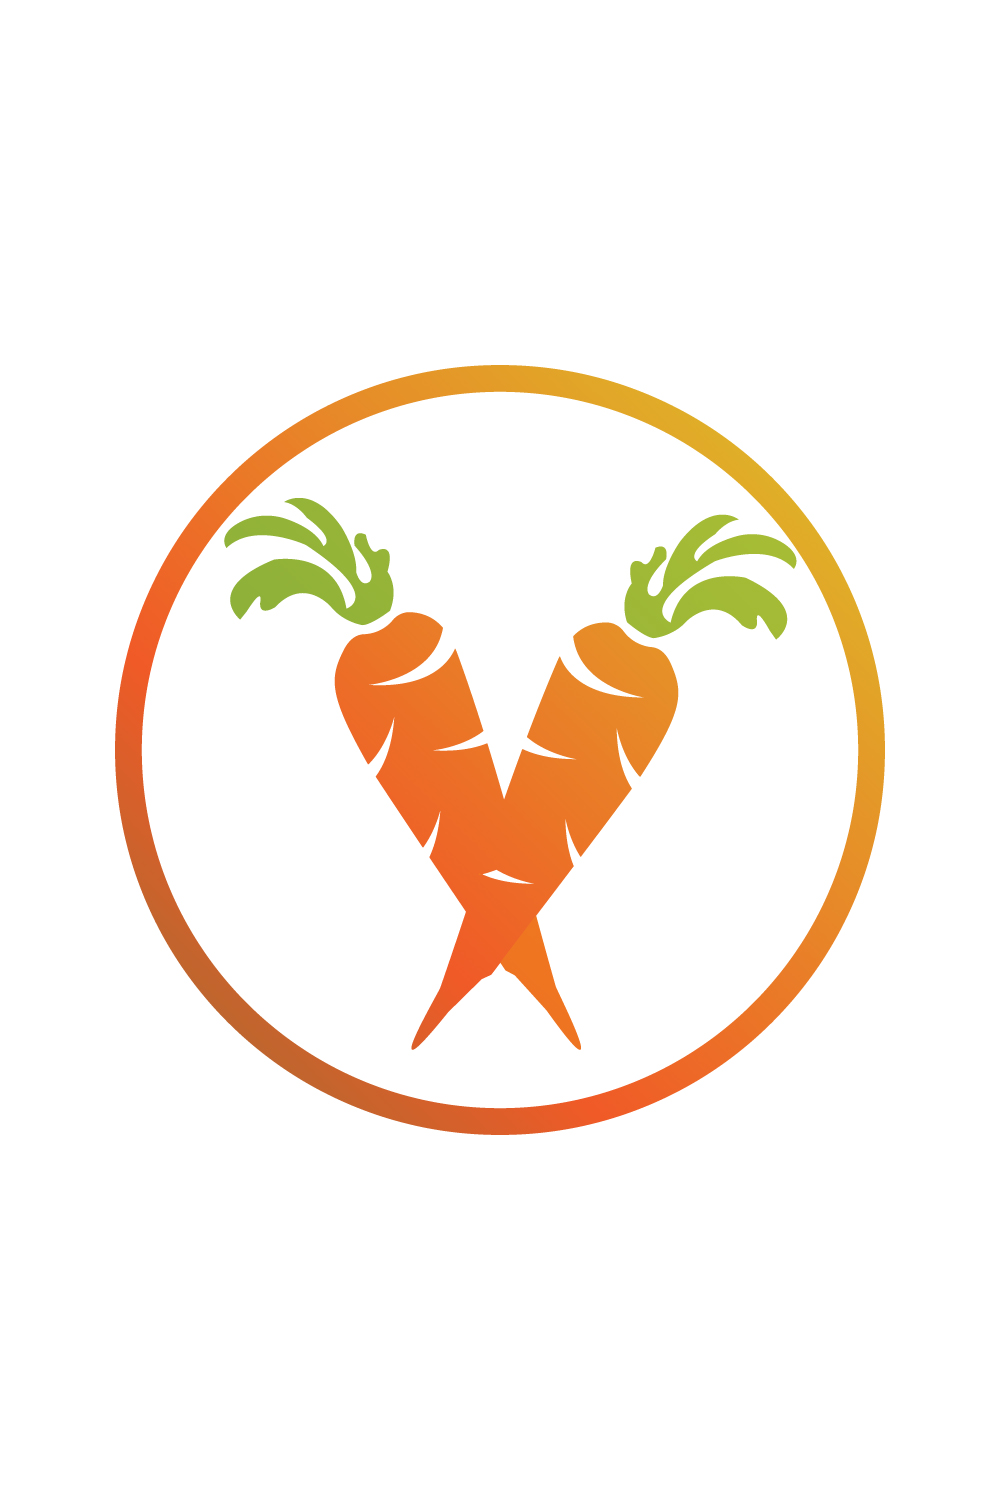 Carrot logo design vector images Carrot Green Rabbit Ears Stock vector template illustration pinterest preview image.